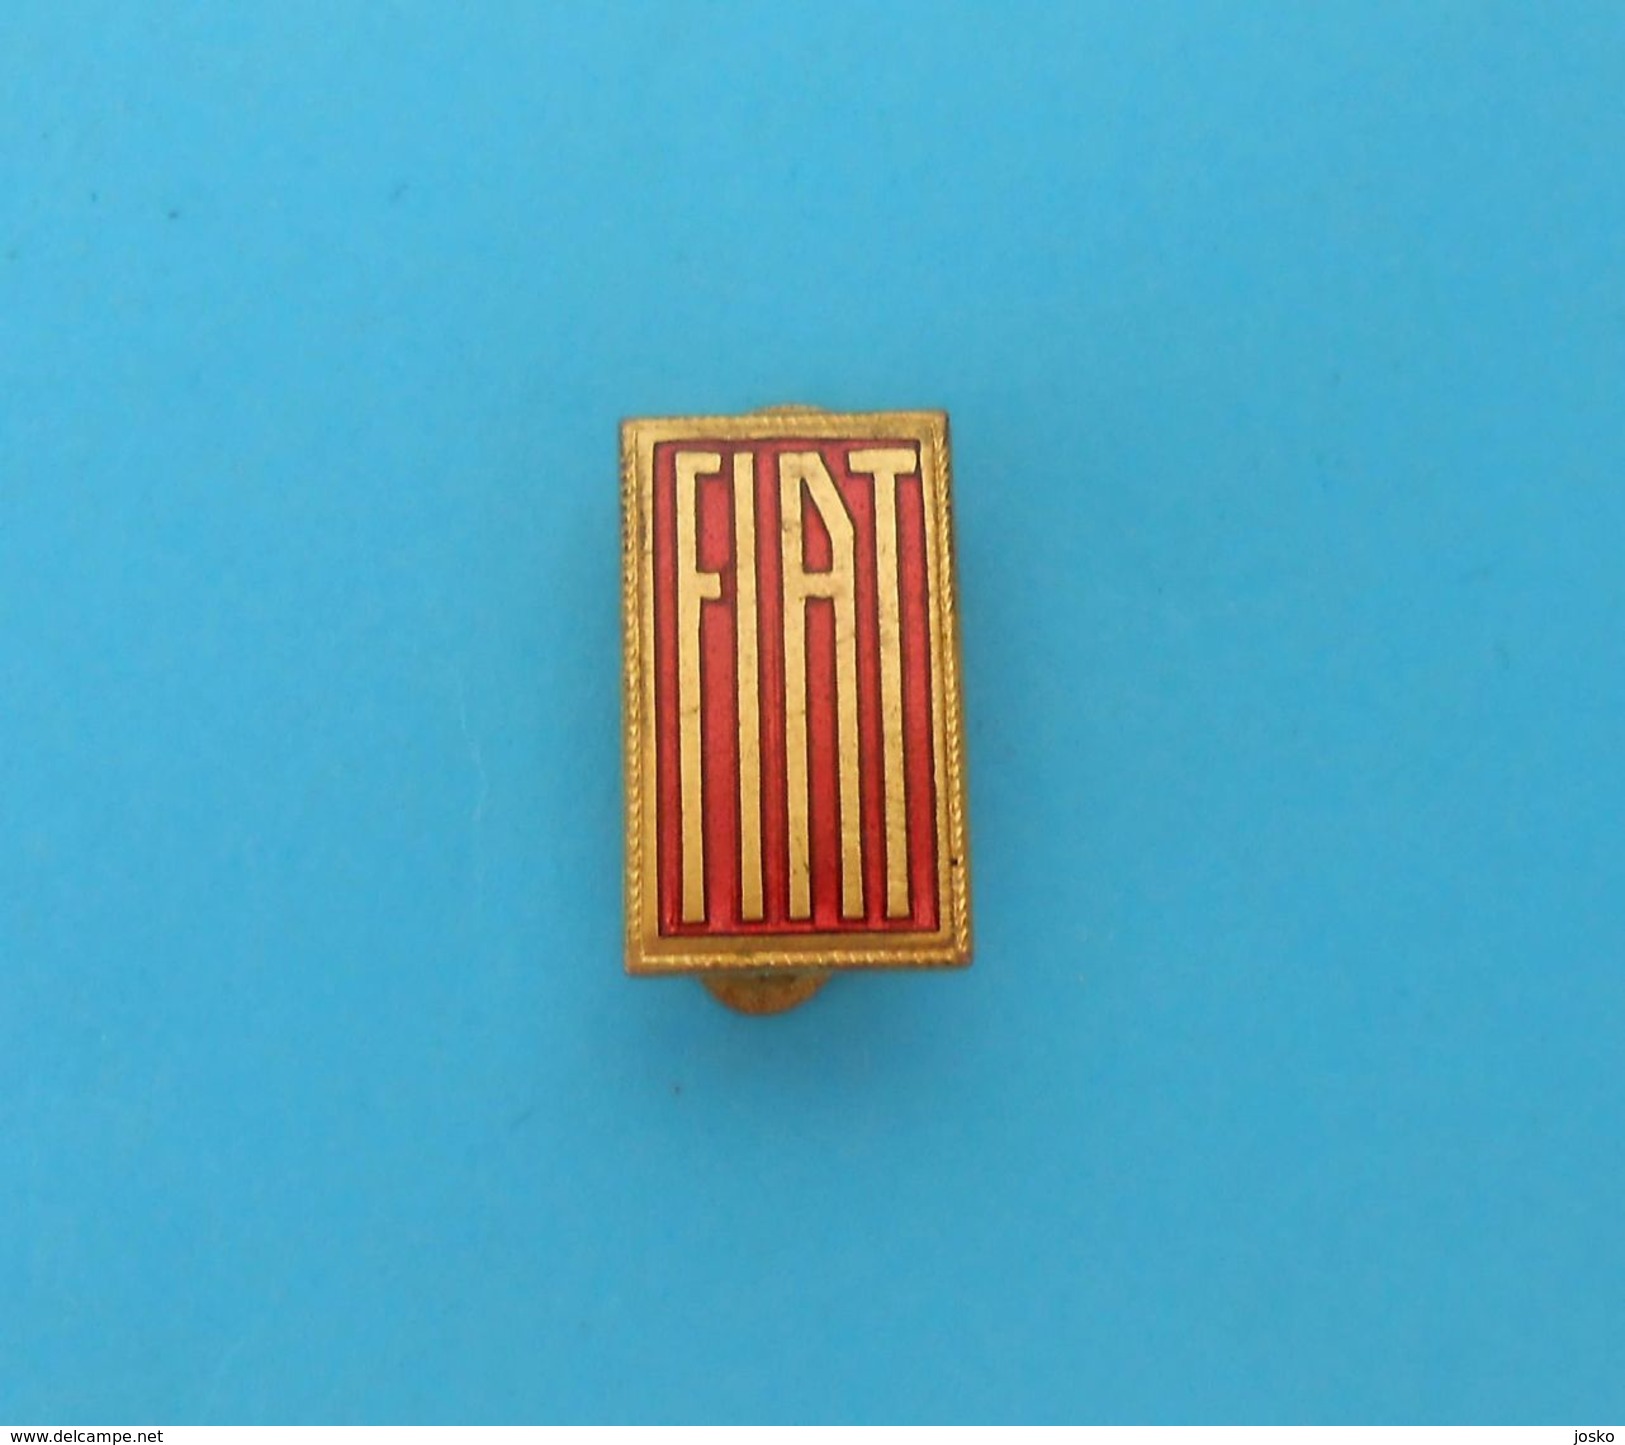 FIAT - Italy Vintage Enamel Buttonhole Pin Badge Italia Car Automobile Auto Automobil Anstecknadel Distintivo - Fiat